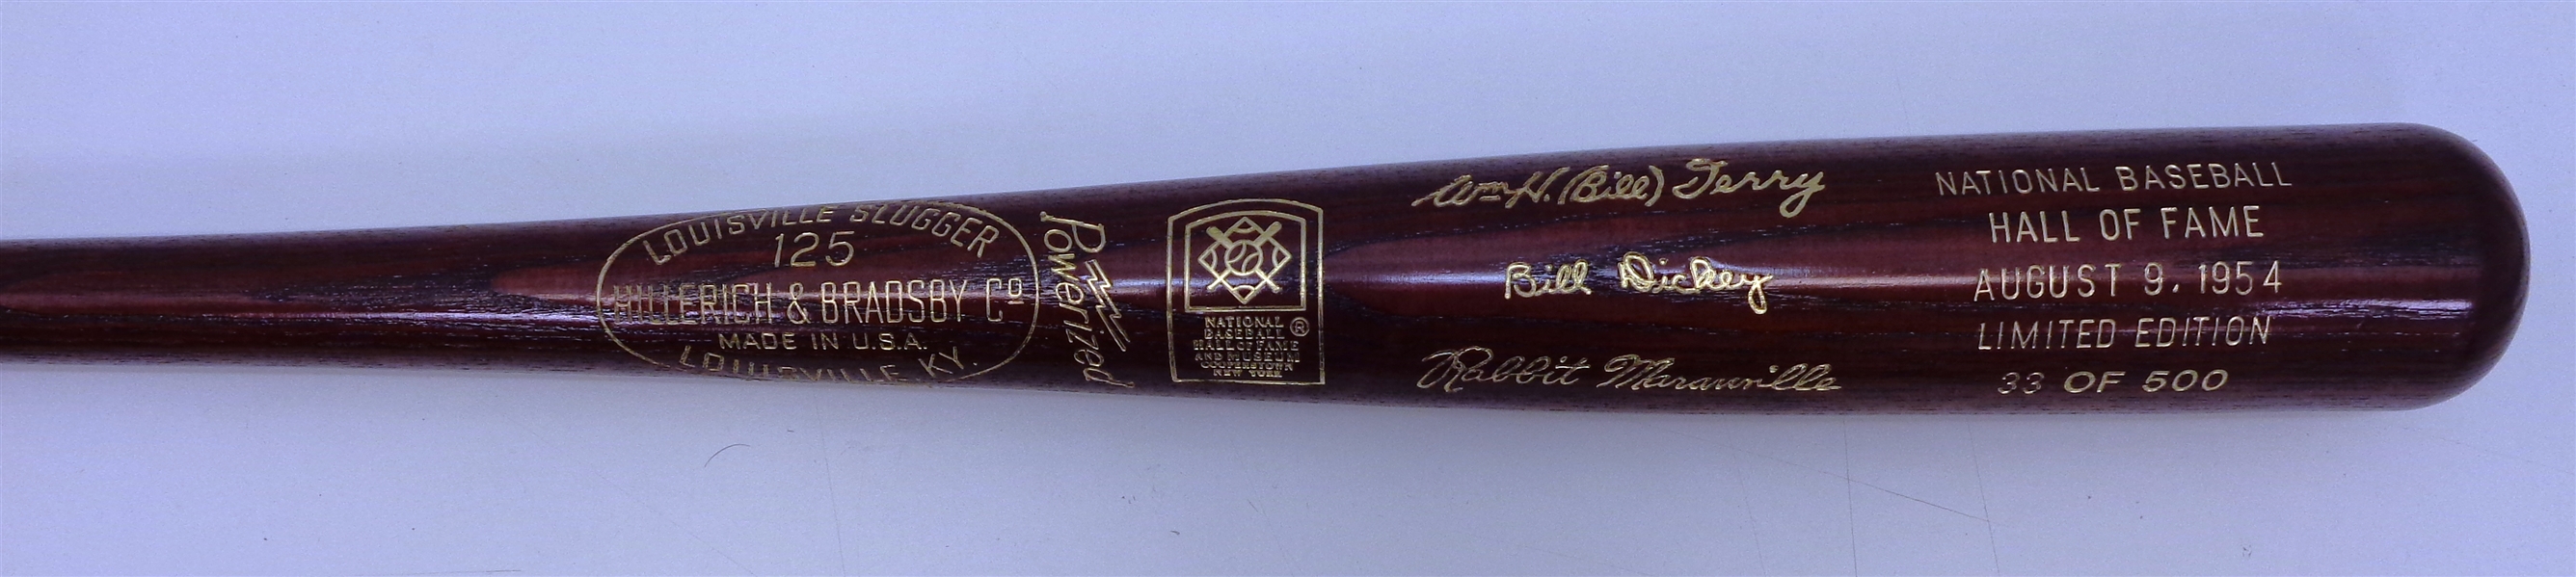 1954 Baseball Hall of Fame Induction Bat